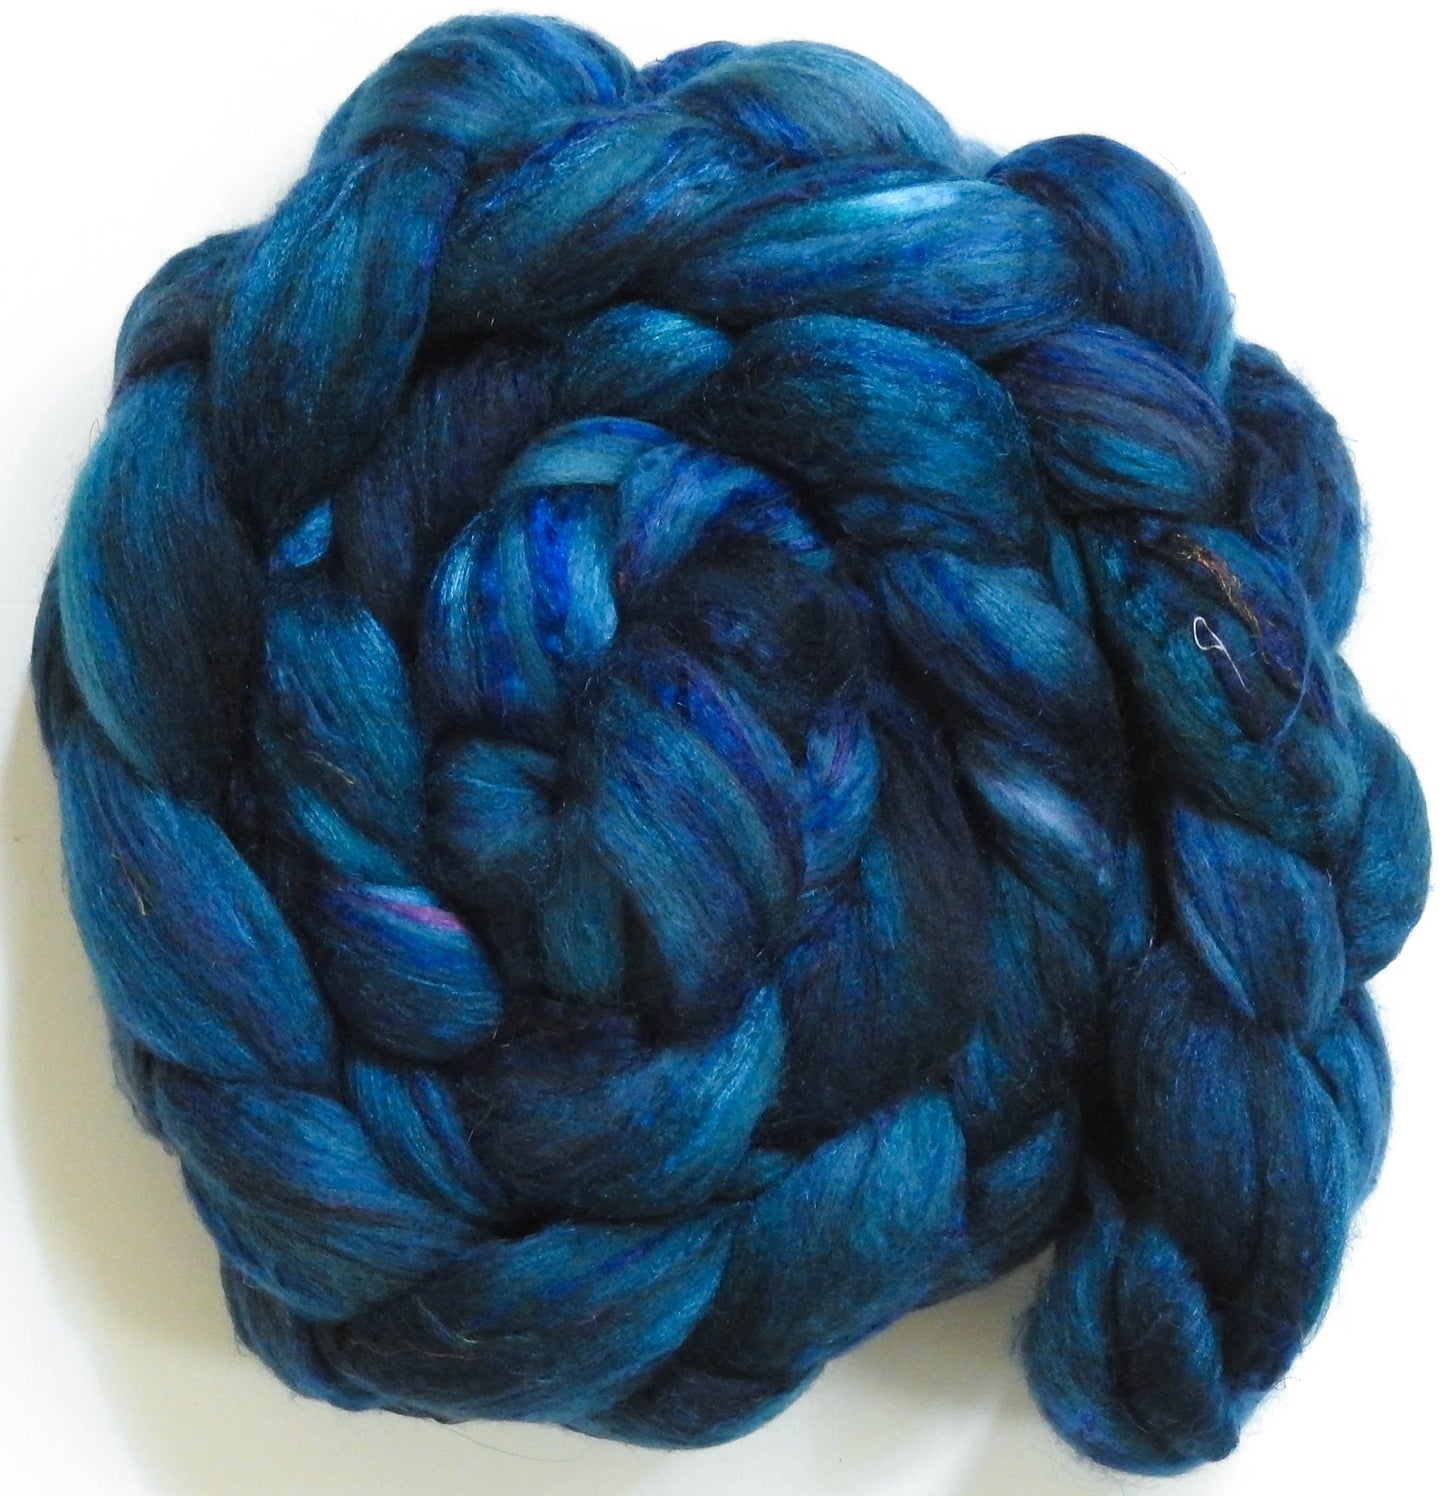 Blue Spruce (5.9 oz)-Batt in a Braid #39 - Merino/ Mulberry Silk / Sari Silk (50/25/25)